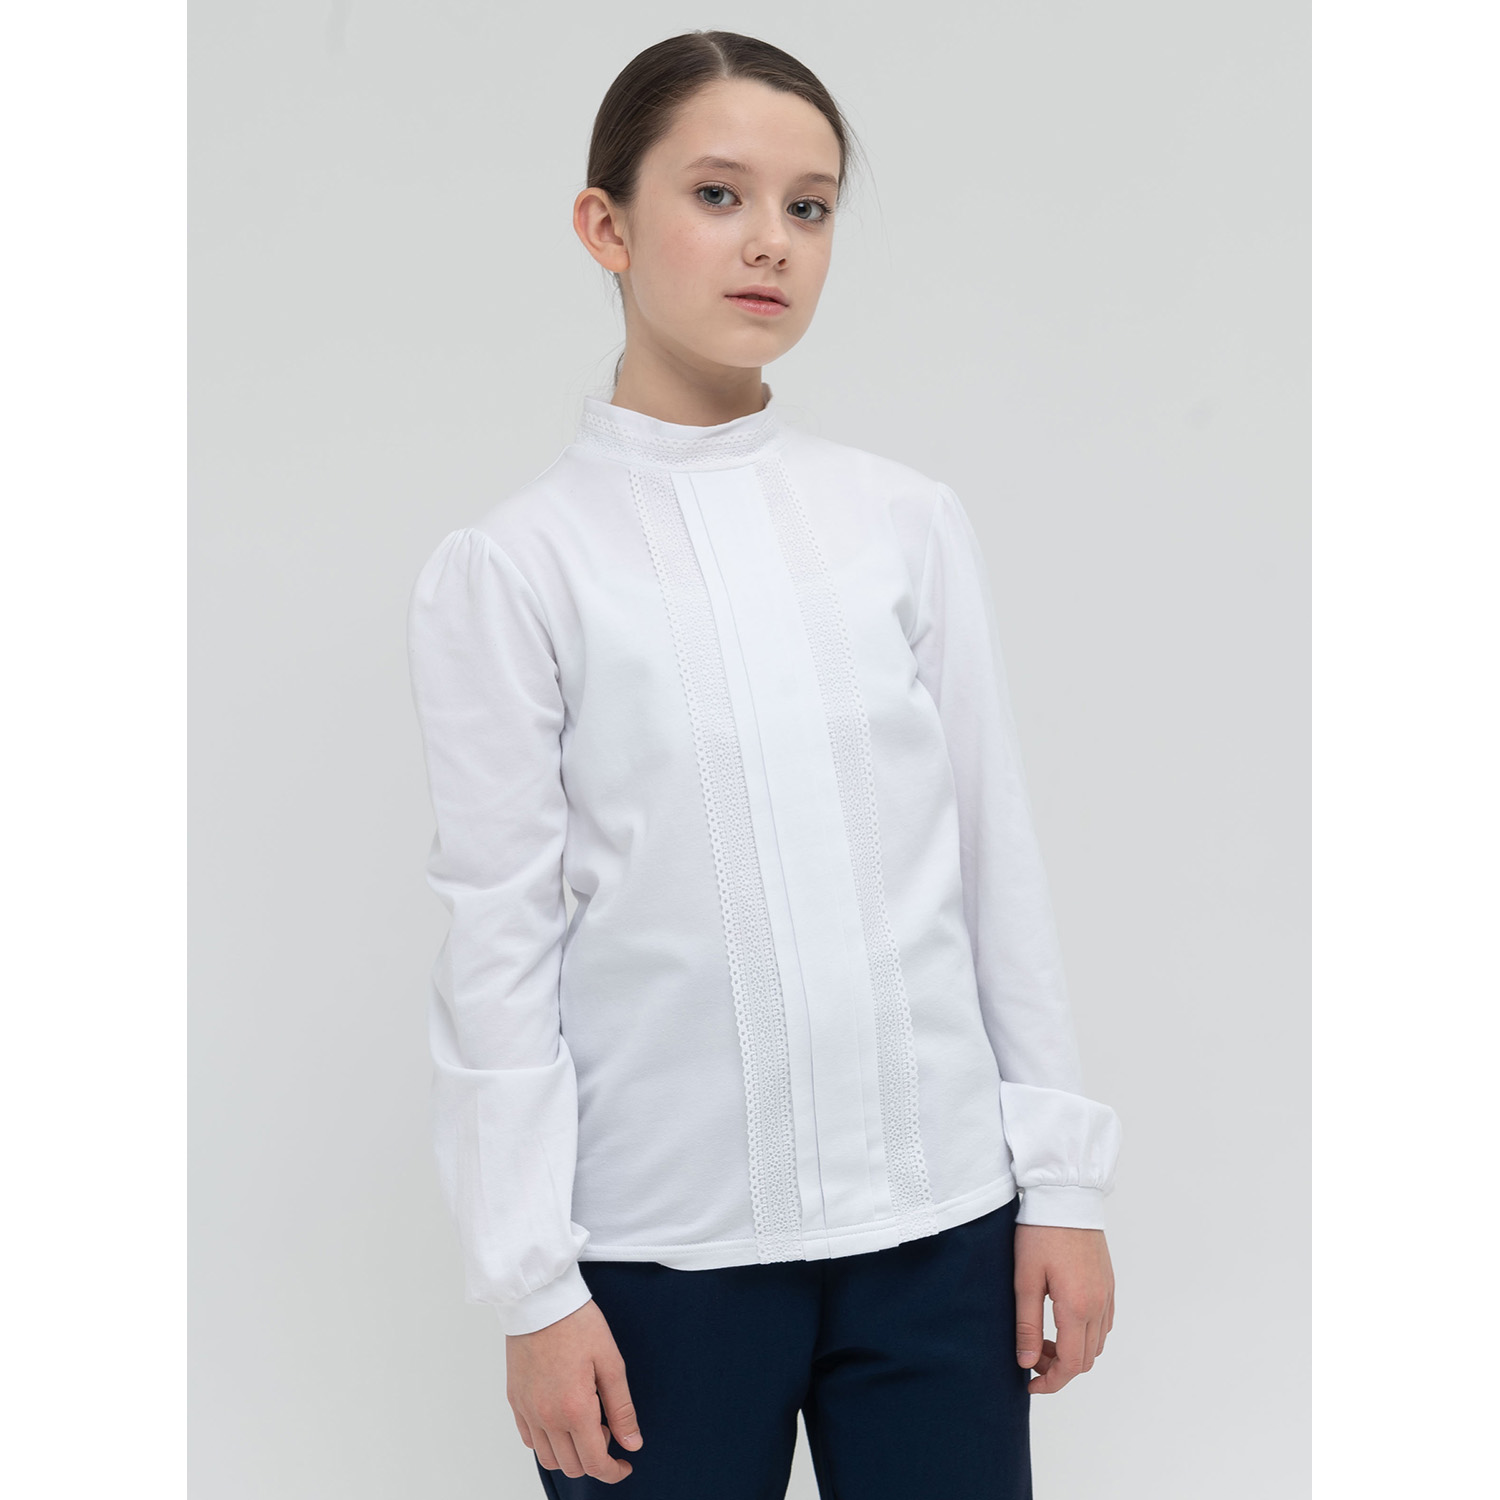 Блузка PELICAN GFJS8139/Белый(2) - фото 1